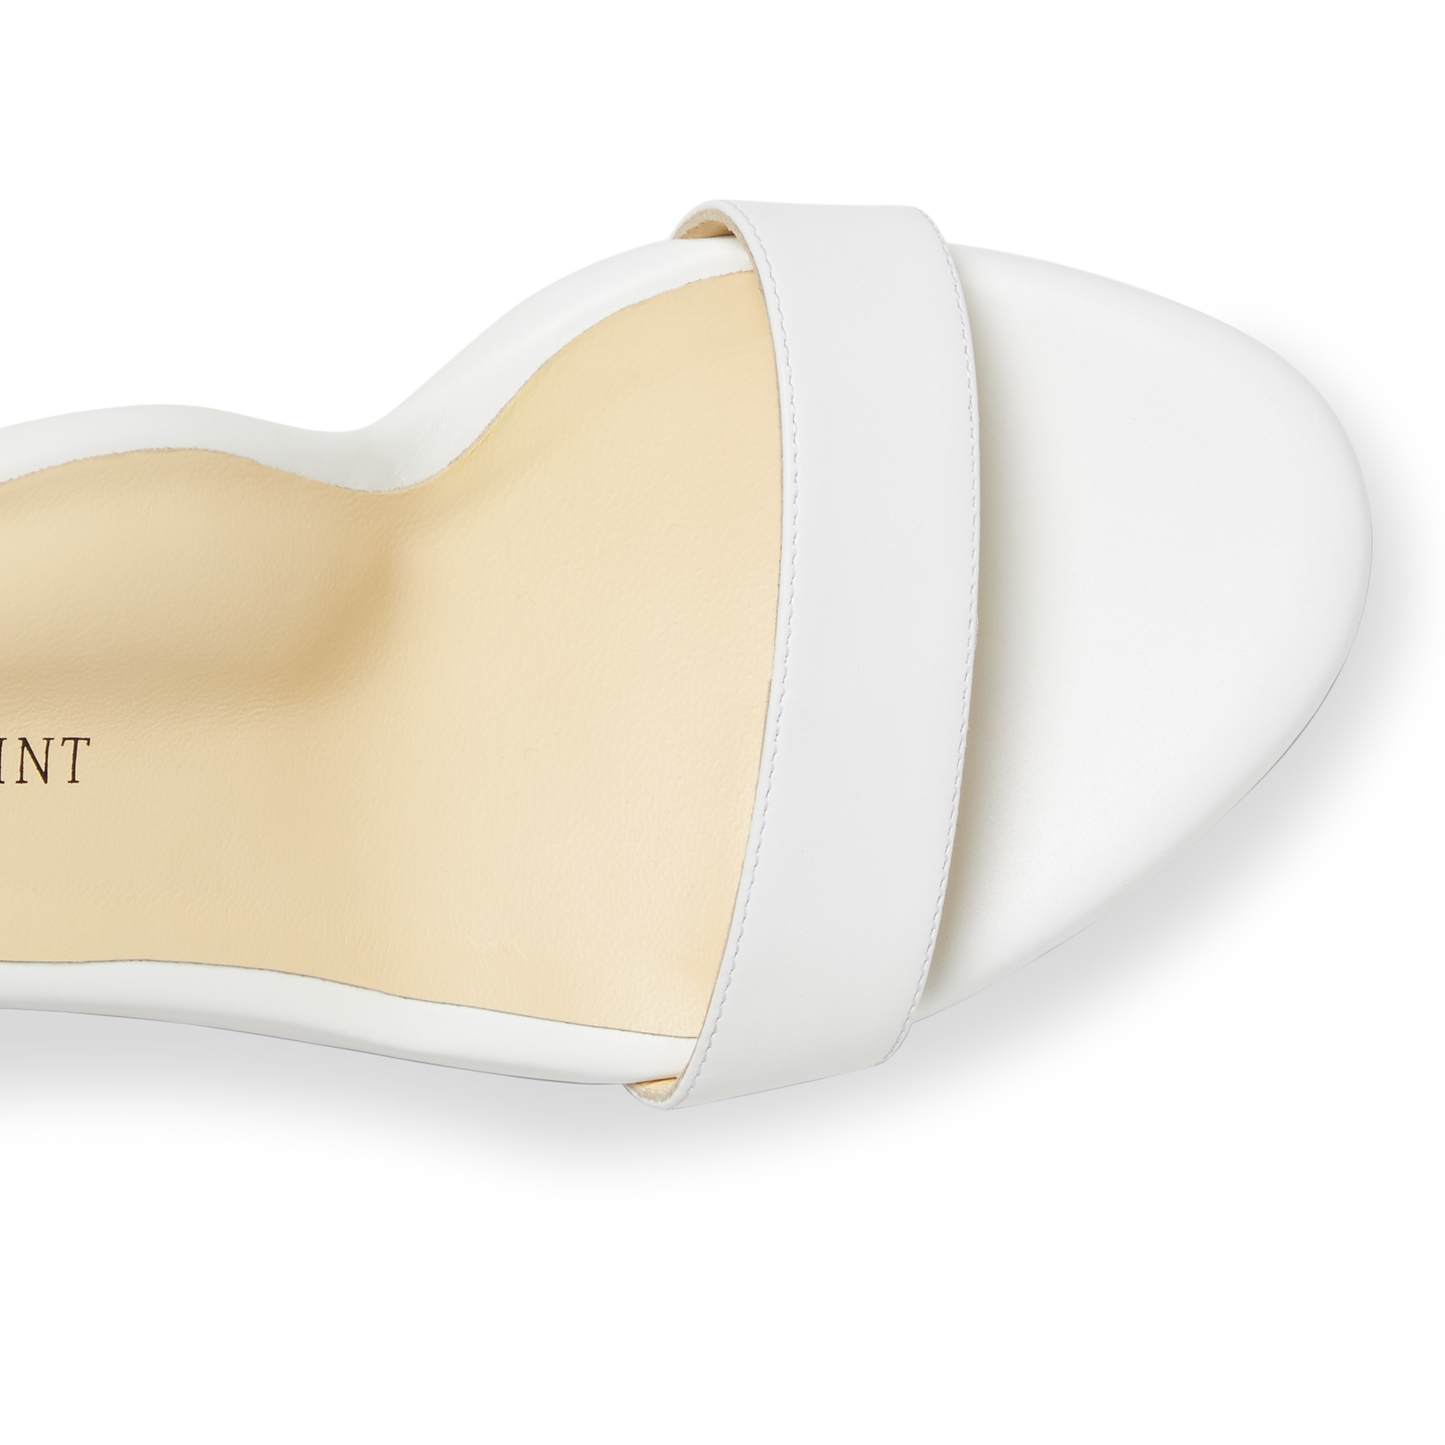 60mm Italian Made Perfect Block Sandal in White Calf